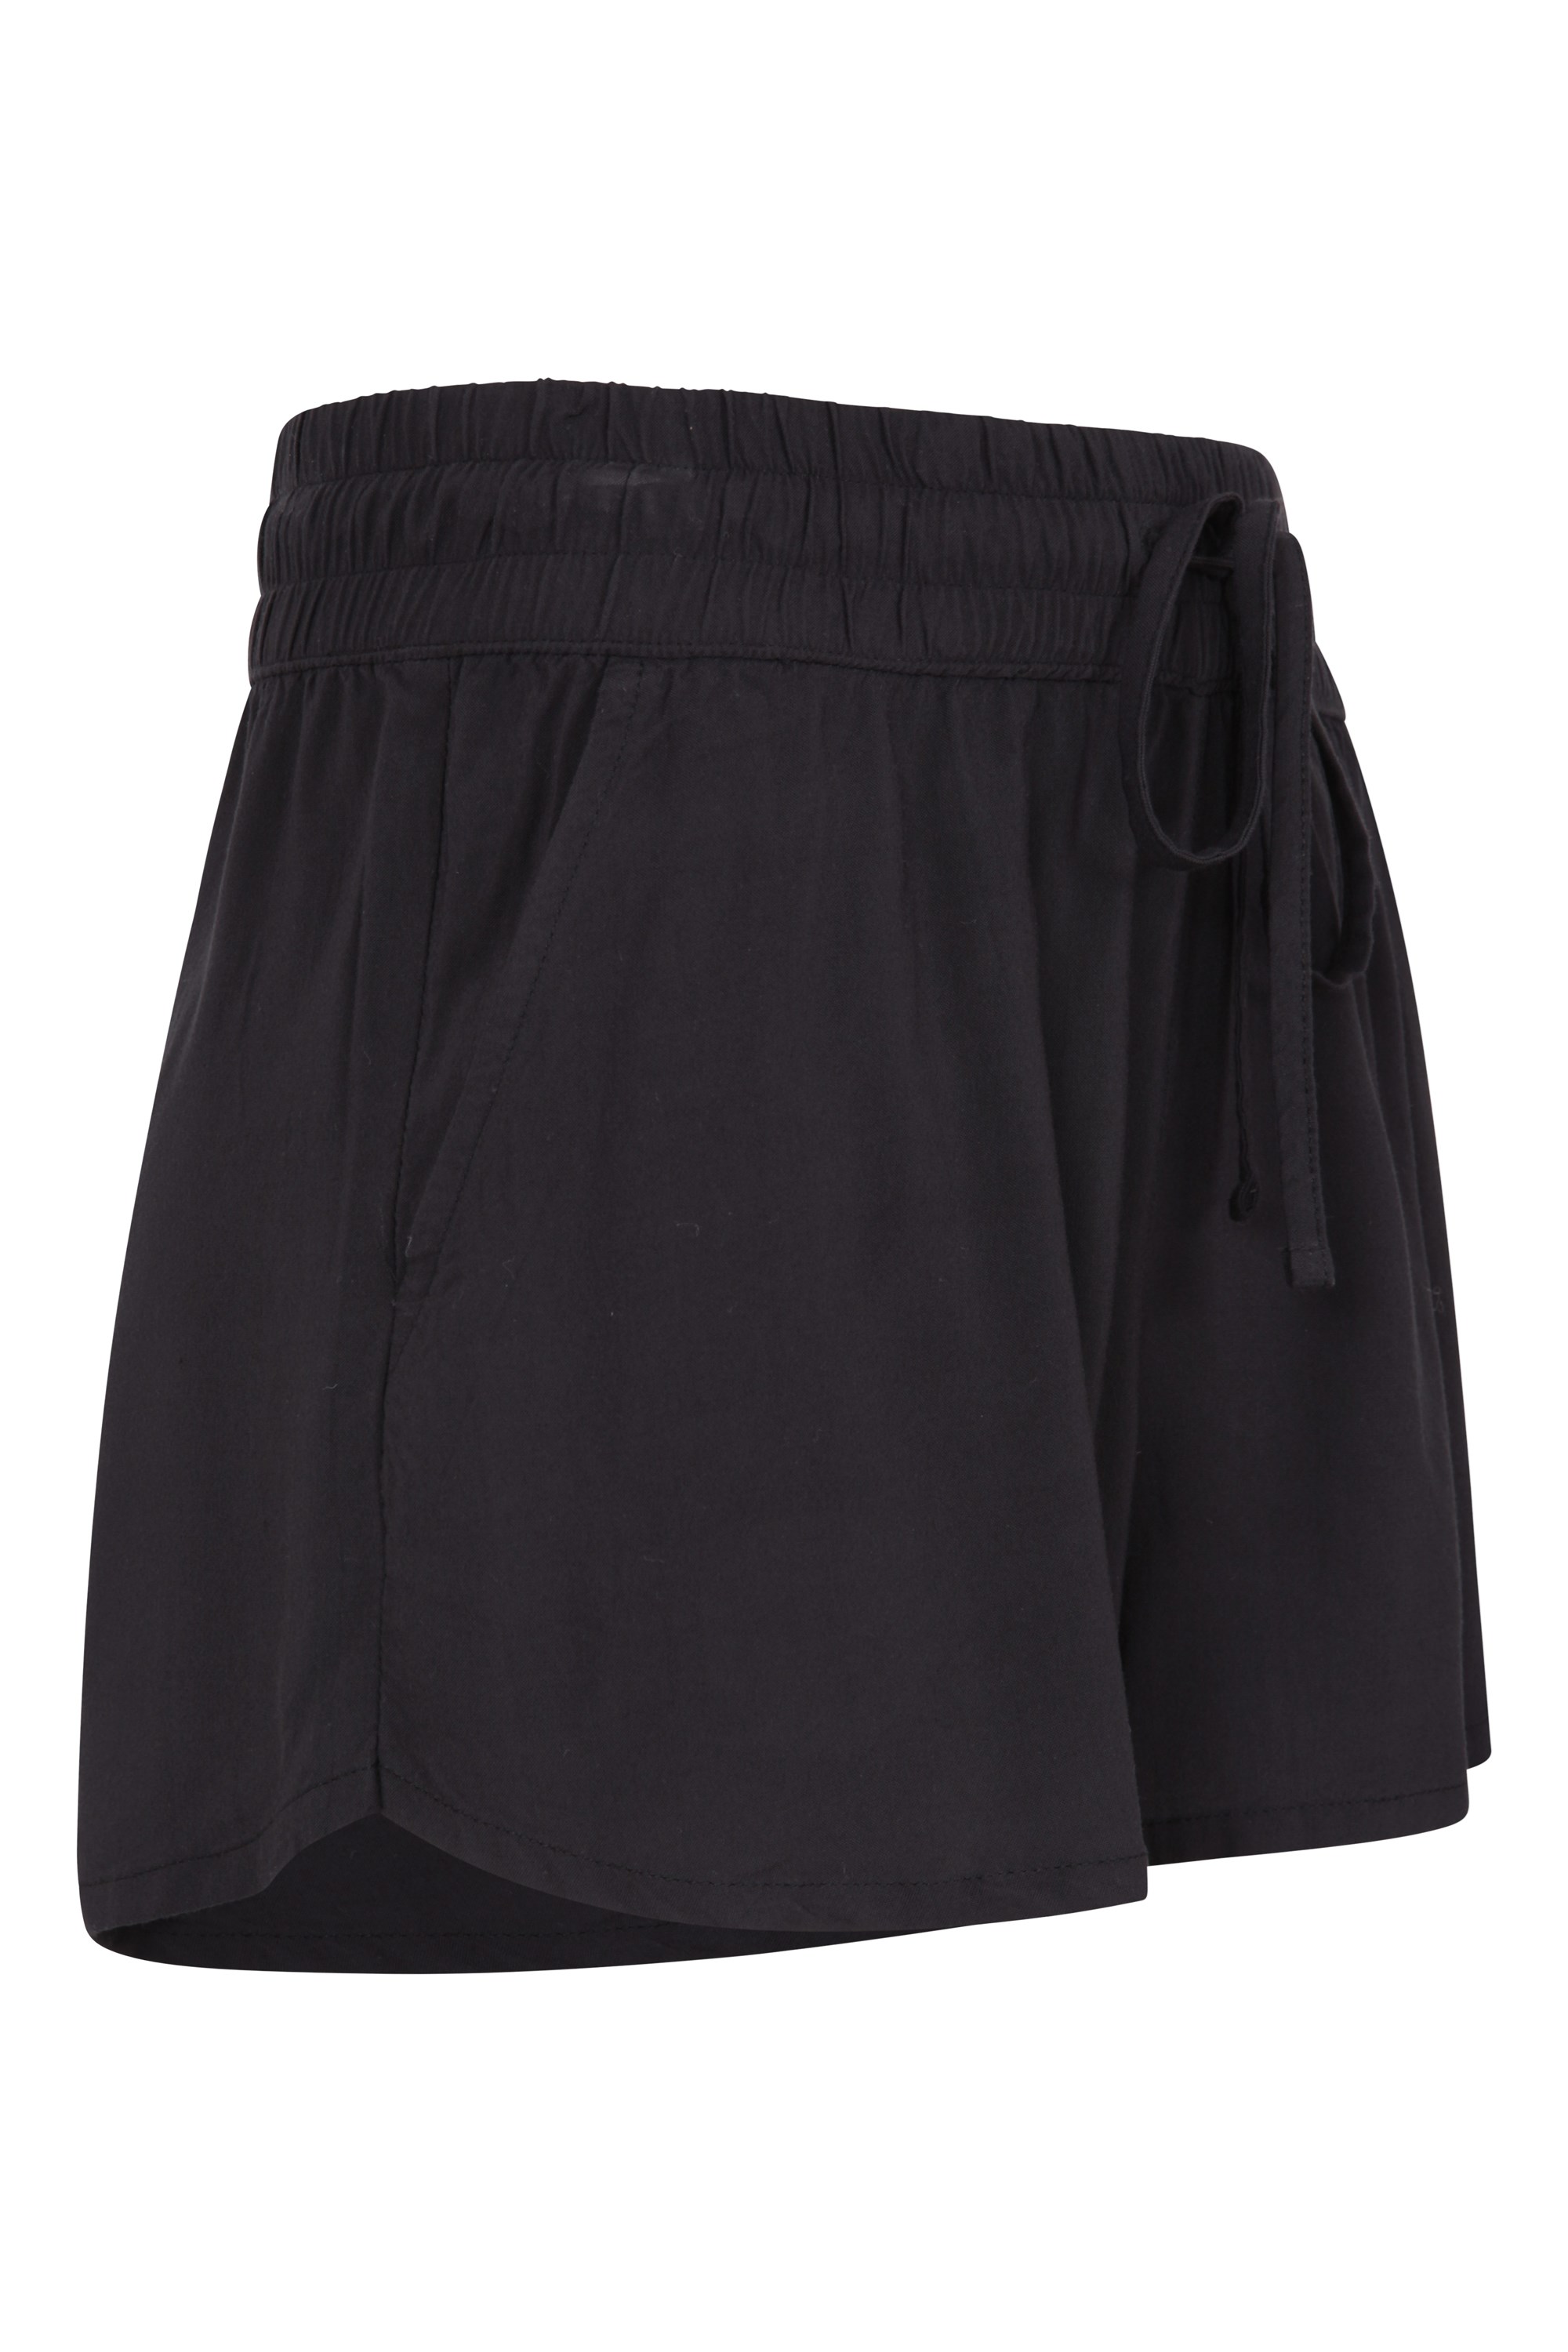 CHGBMOK Shorts Women Fashion Women Sweat Shorts Summer Casual Loose Bandag  Solid High Waist Short Pants Womens Shorts on Clearance 